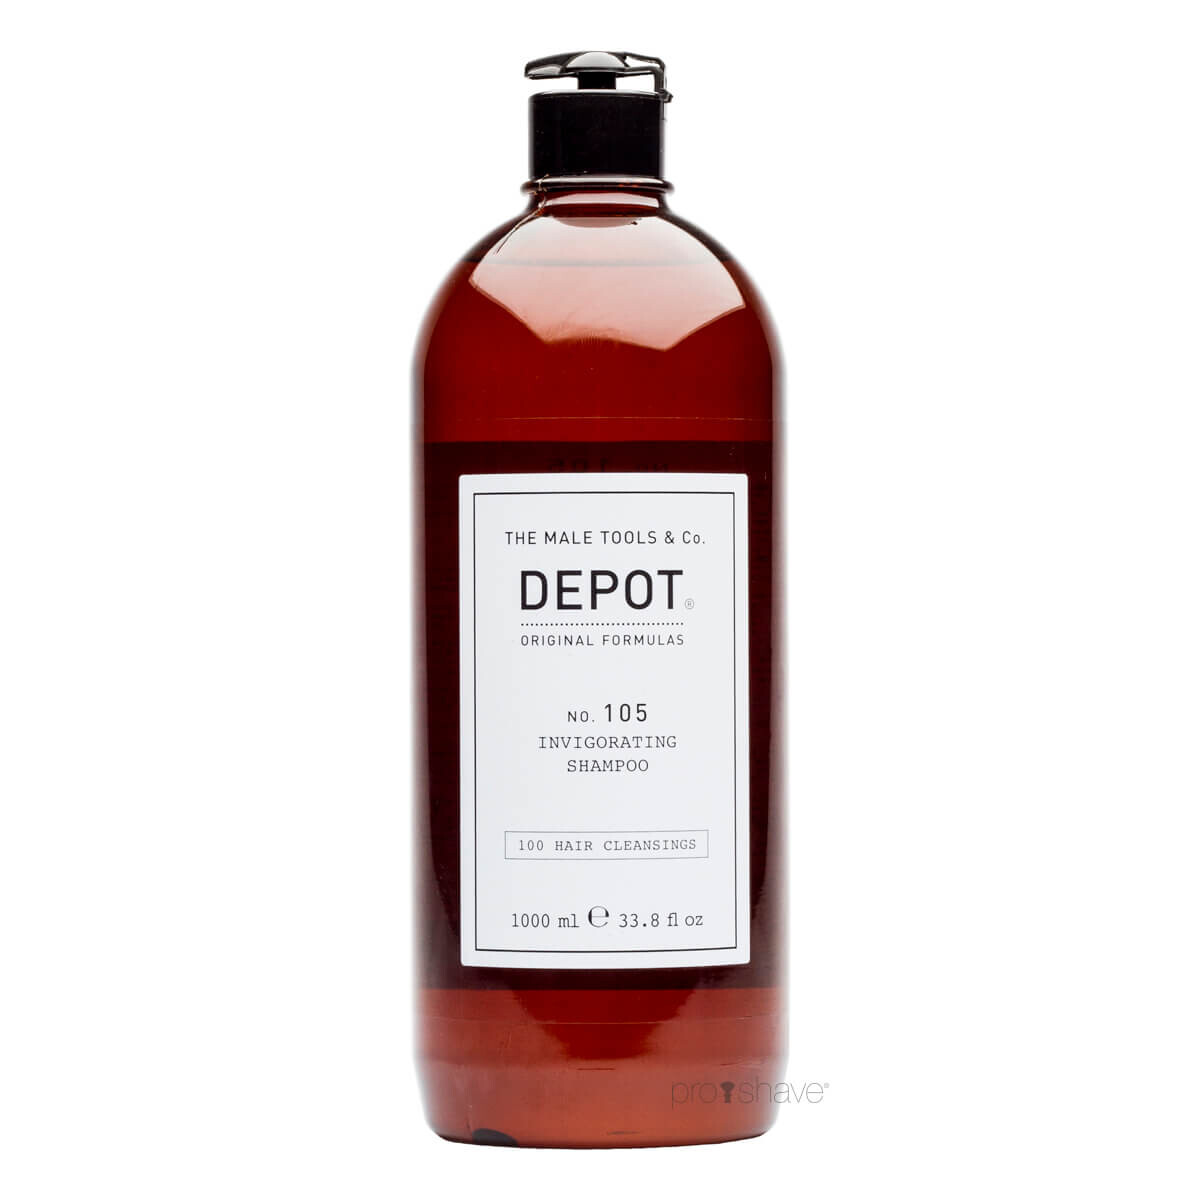 Depot Invigorating Shampoo, No. 105, 1000 ml.